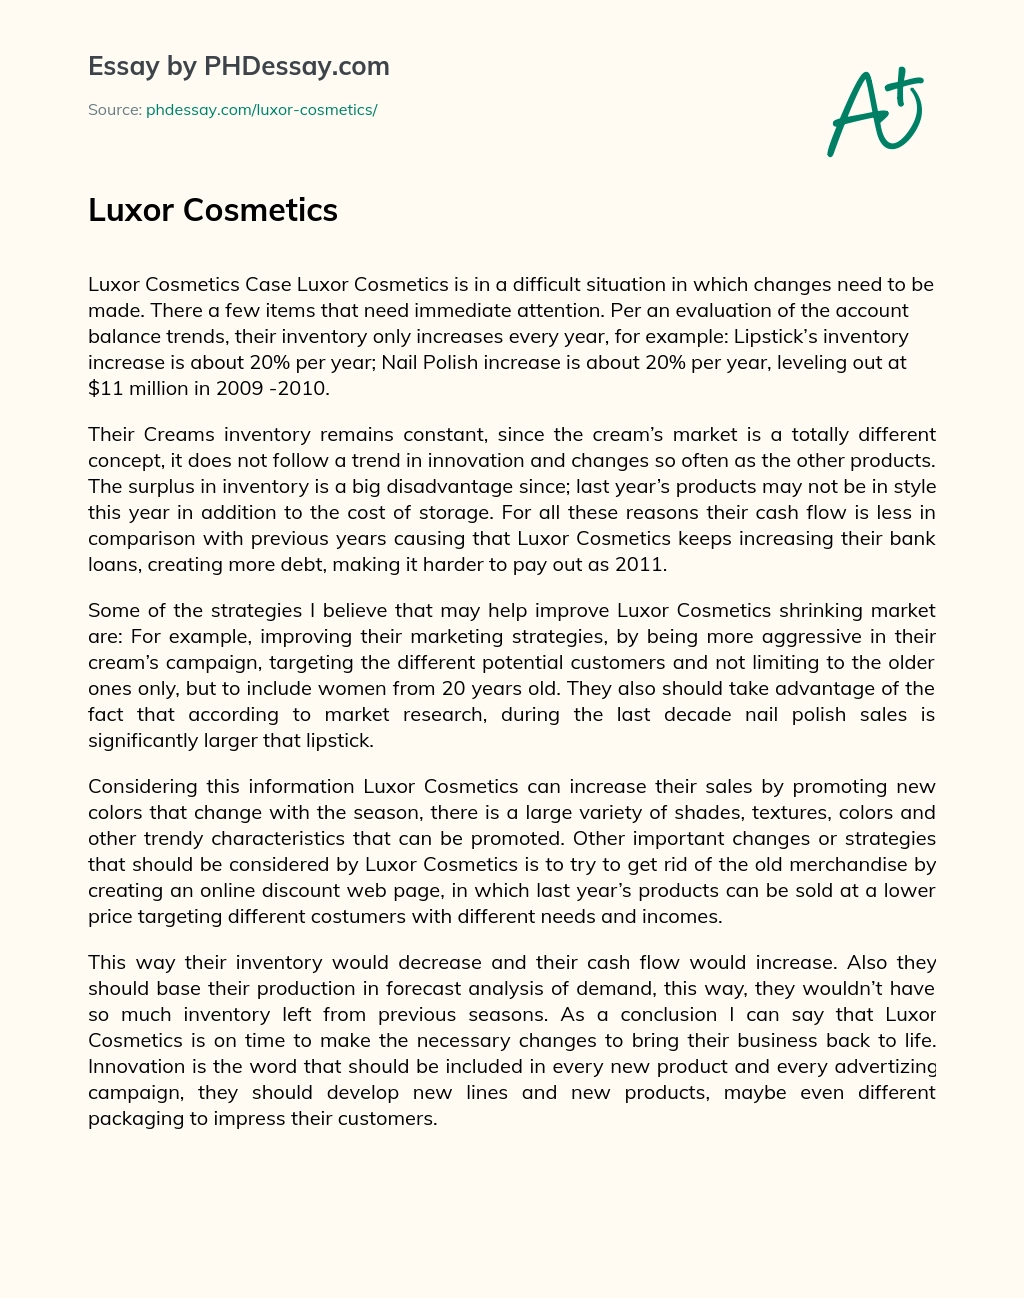 Luxor Cosmetics essay